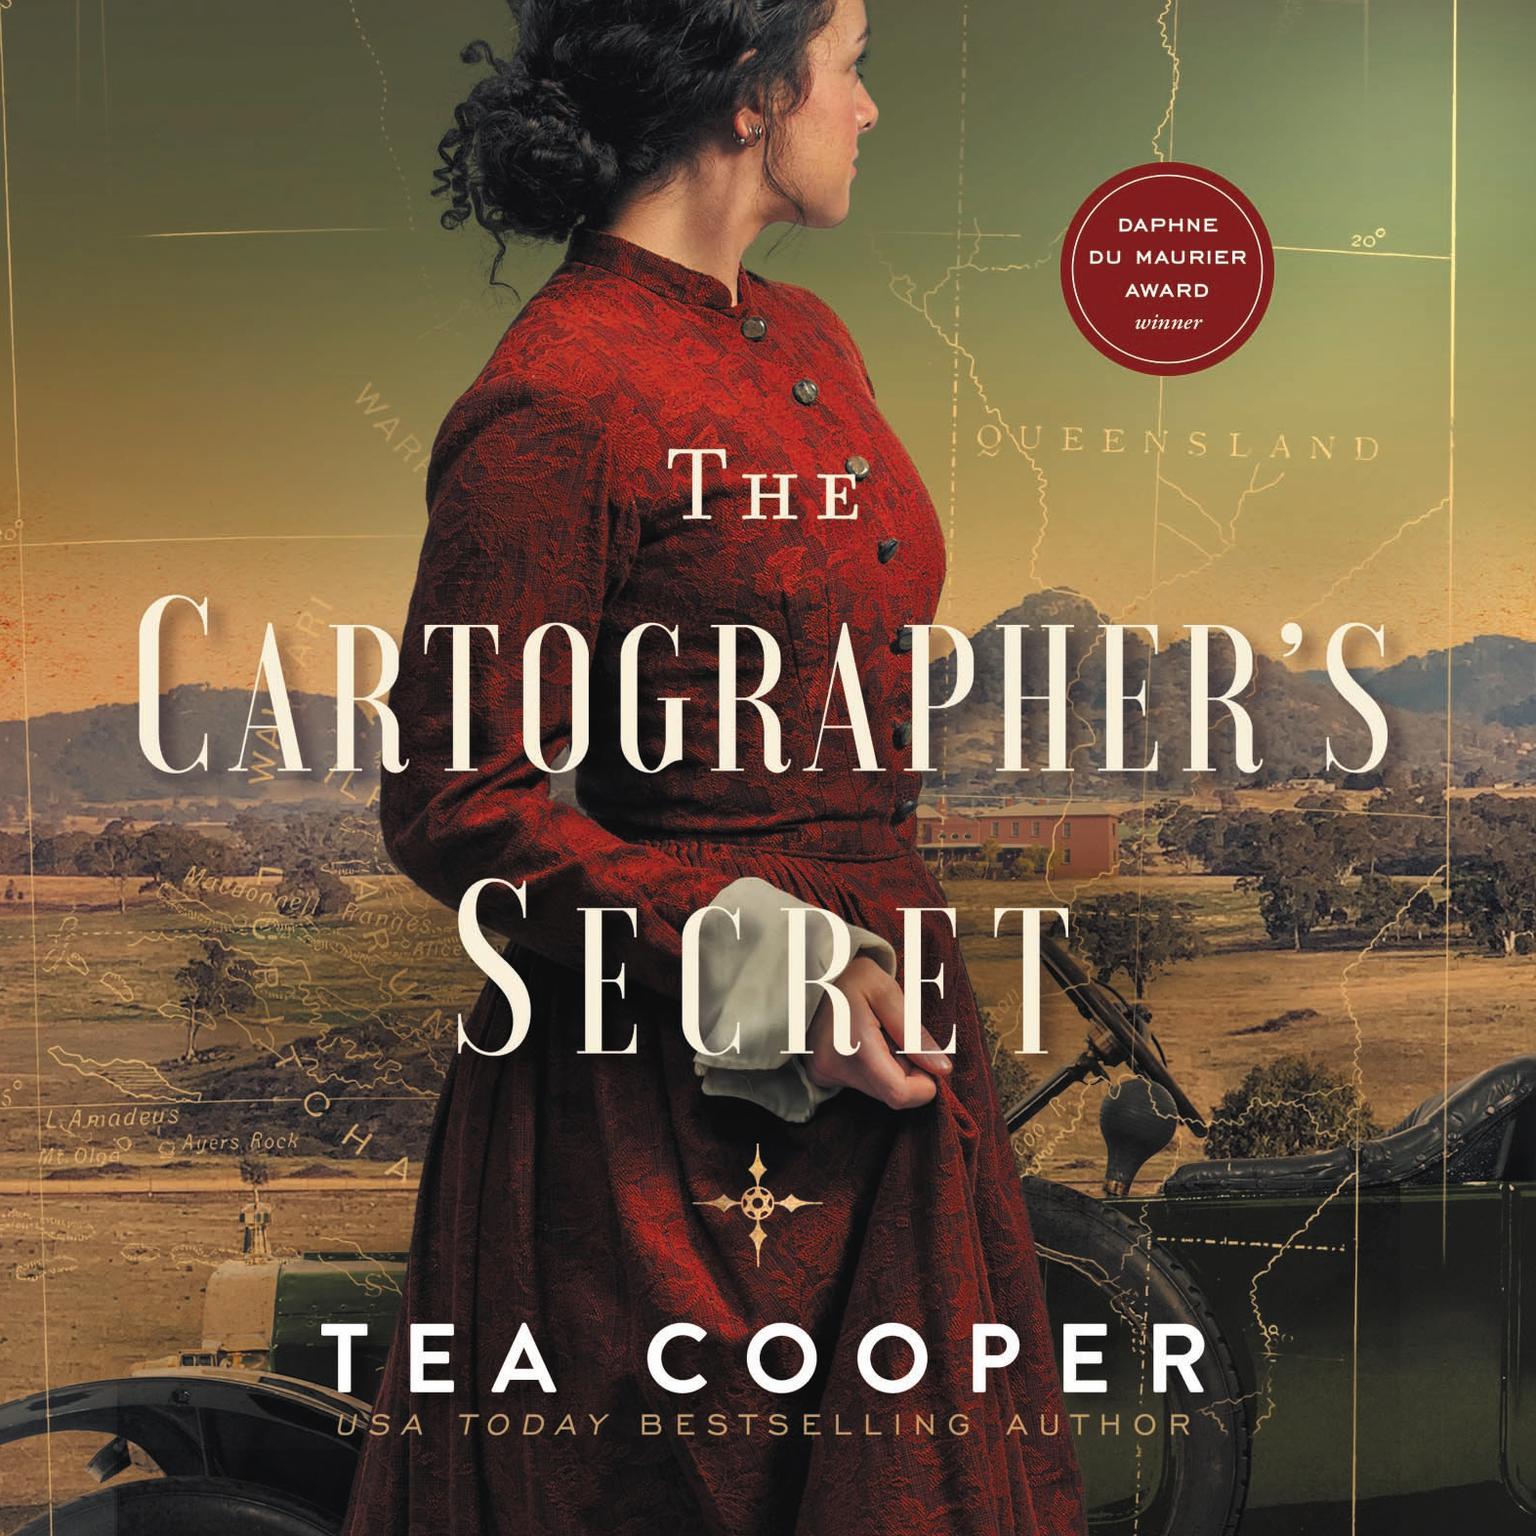 The Cartographers Secret Audiobook, by Tea Cooper